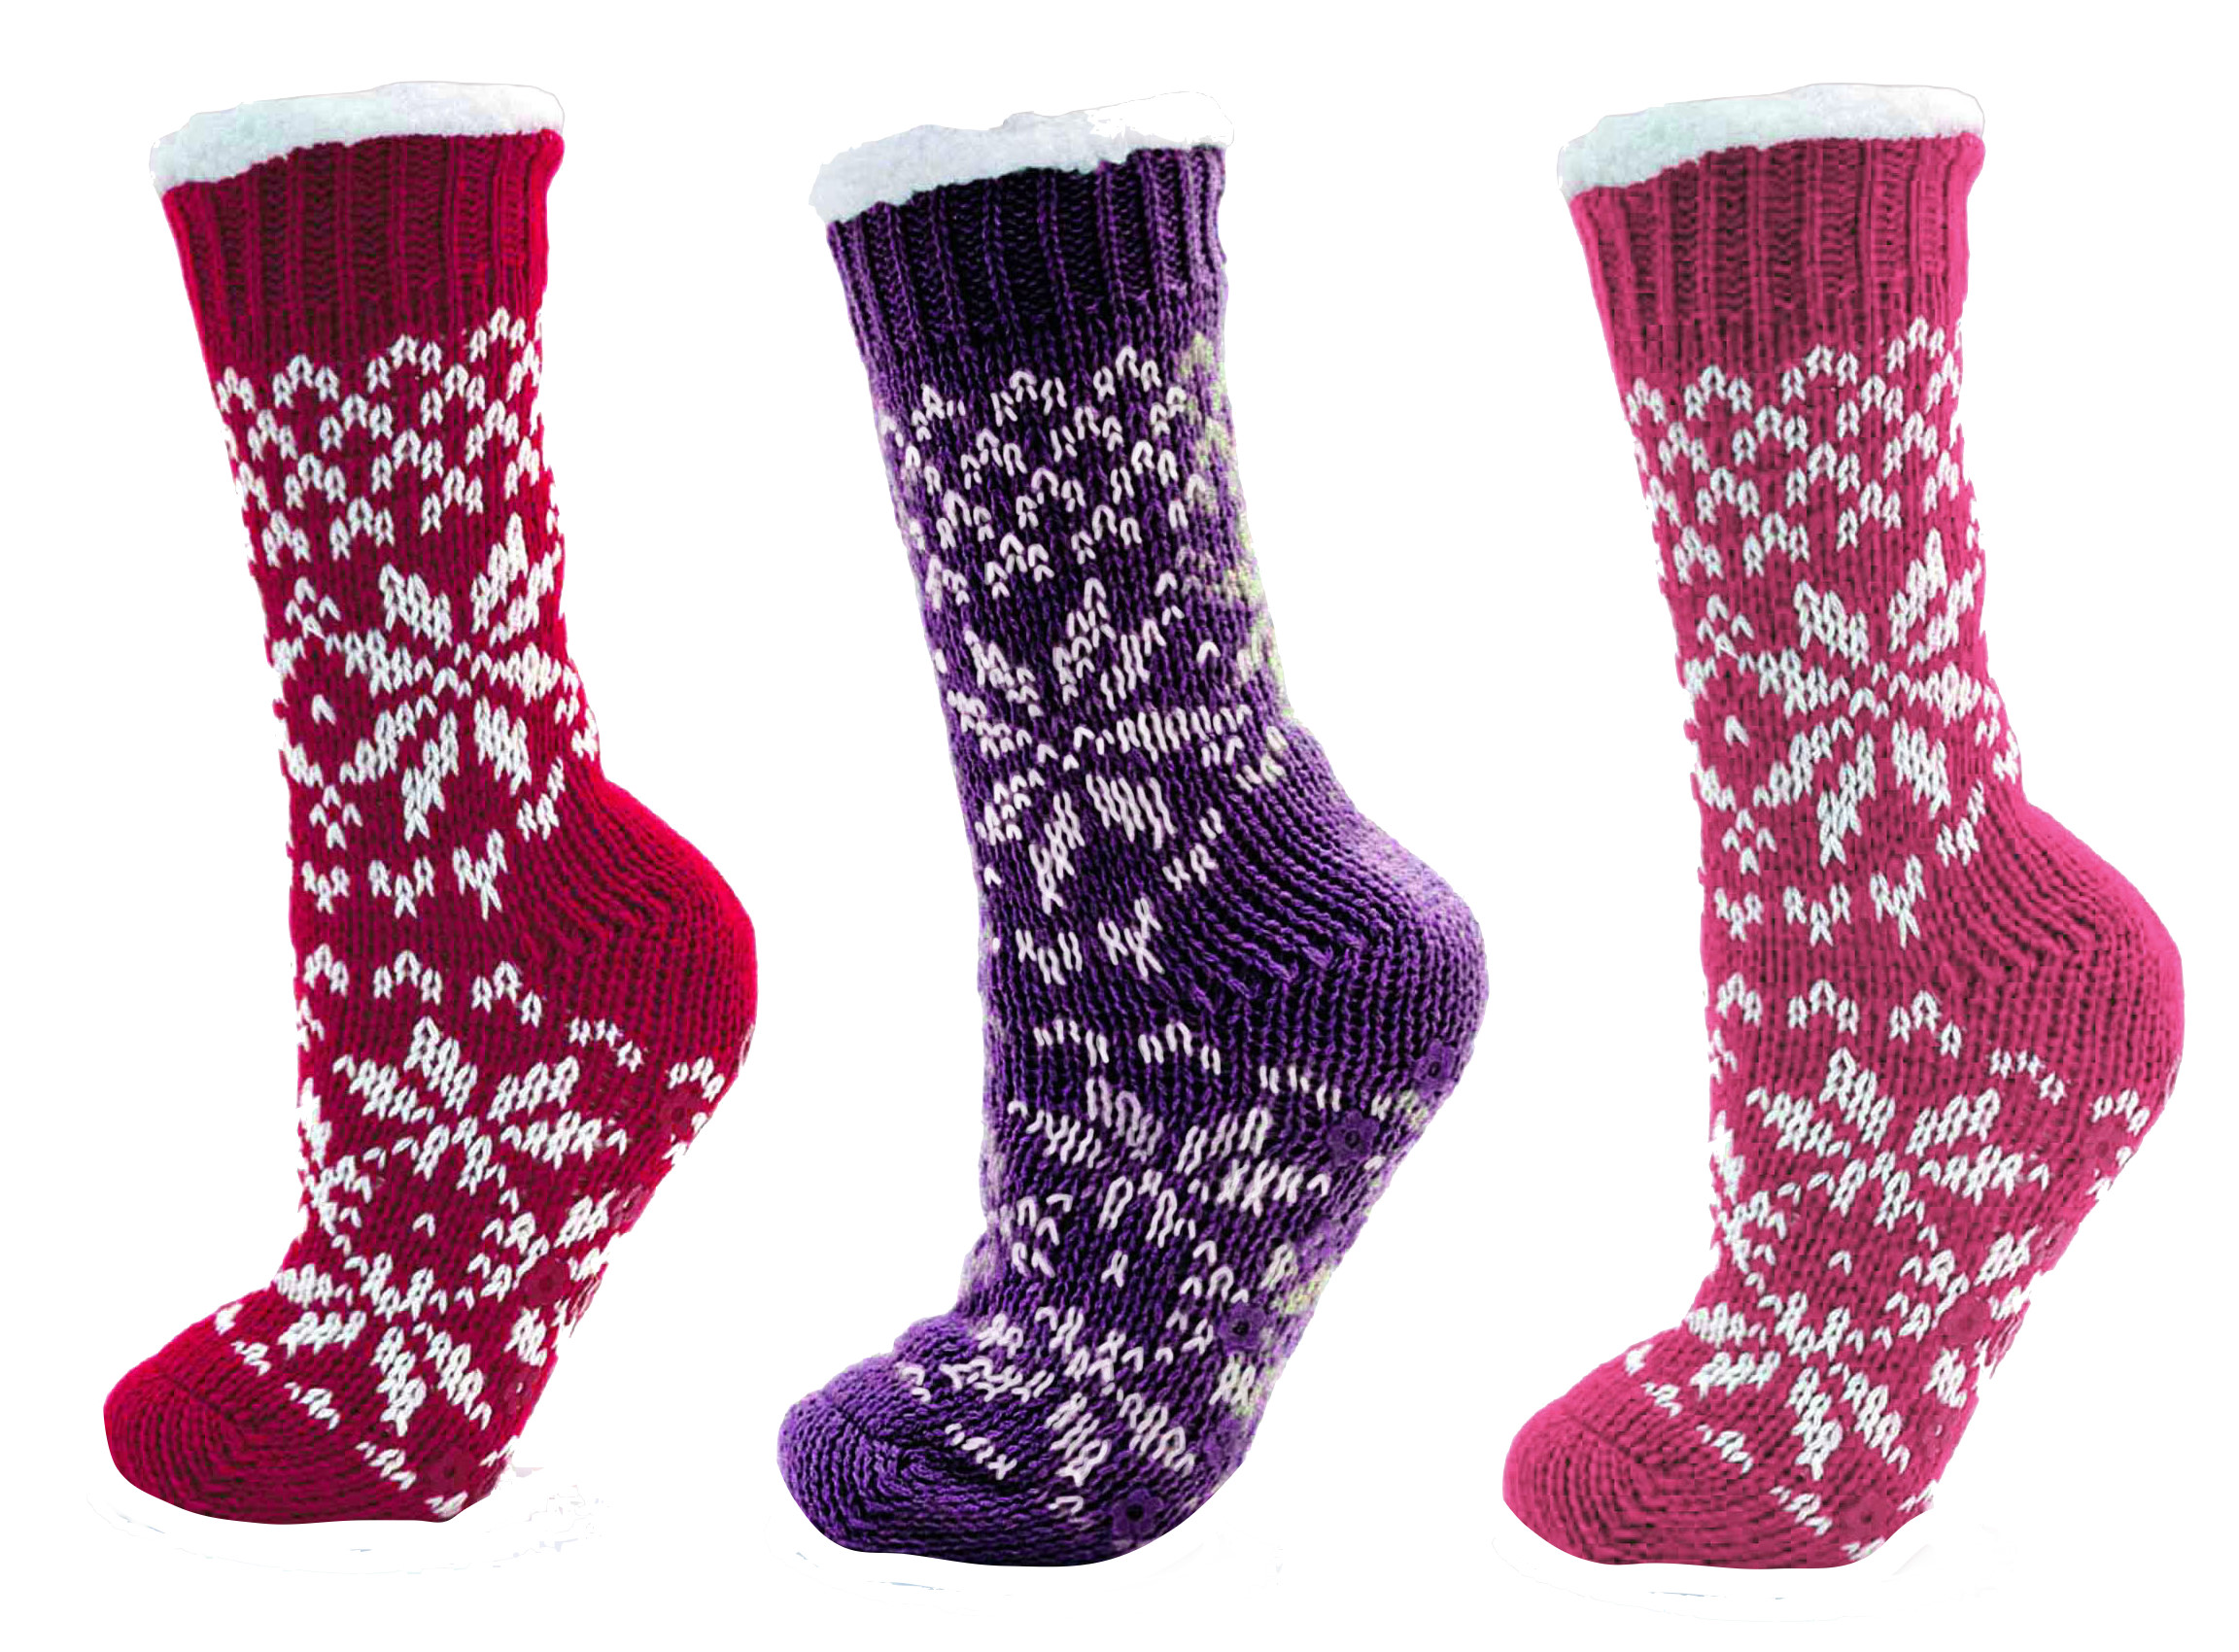 Ladies Knitted Socks SK248A.jpg  by Thingimijigs